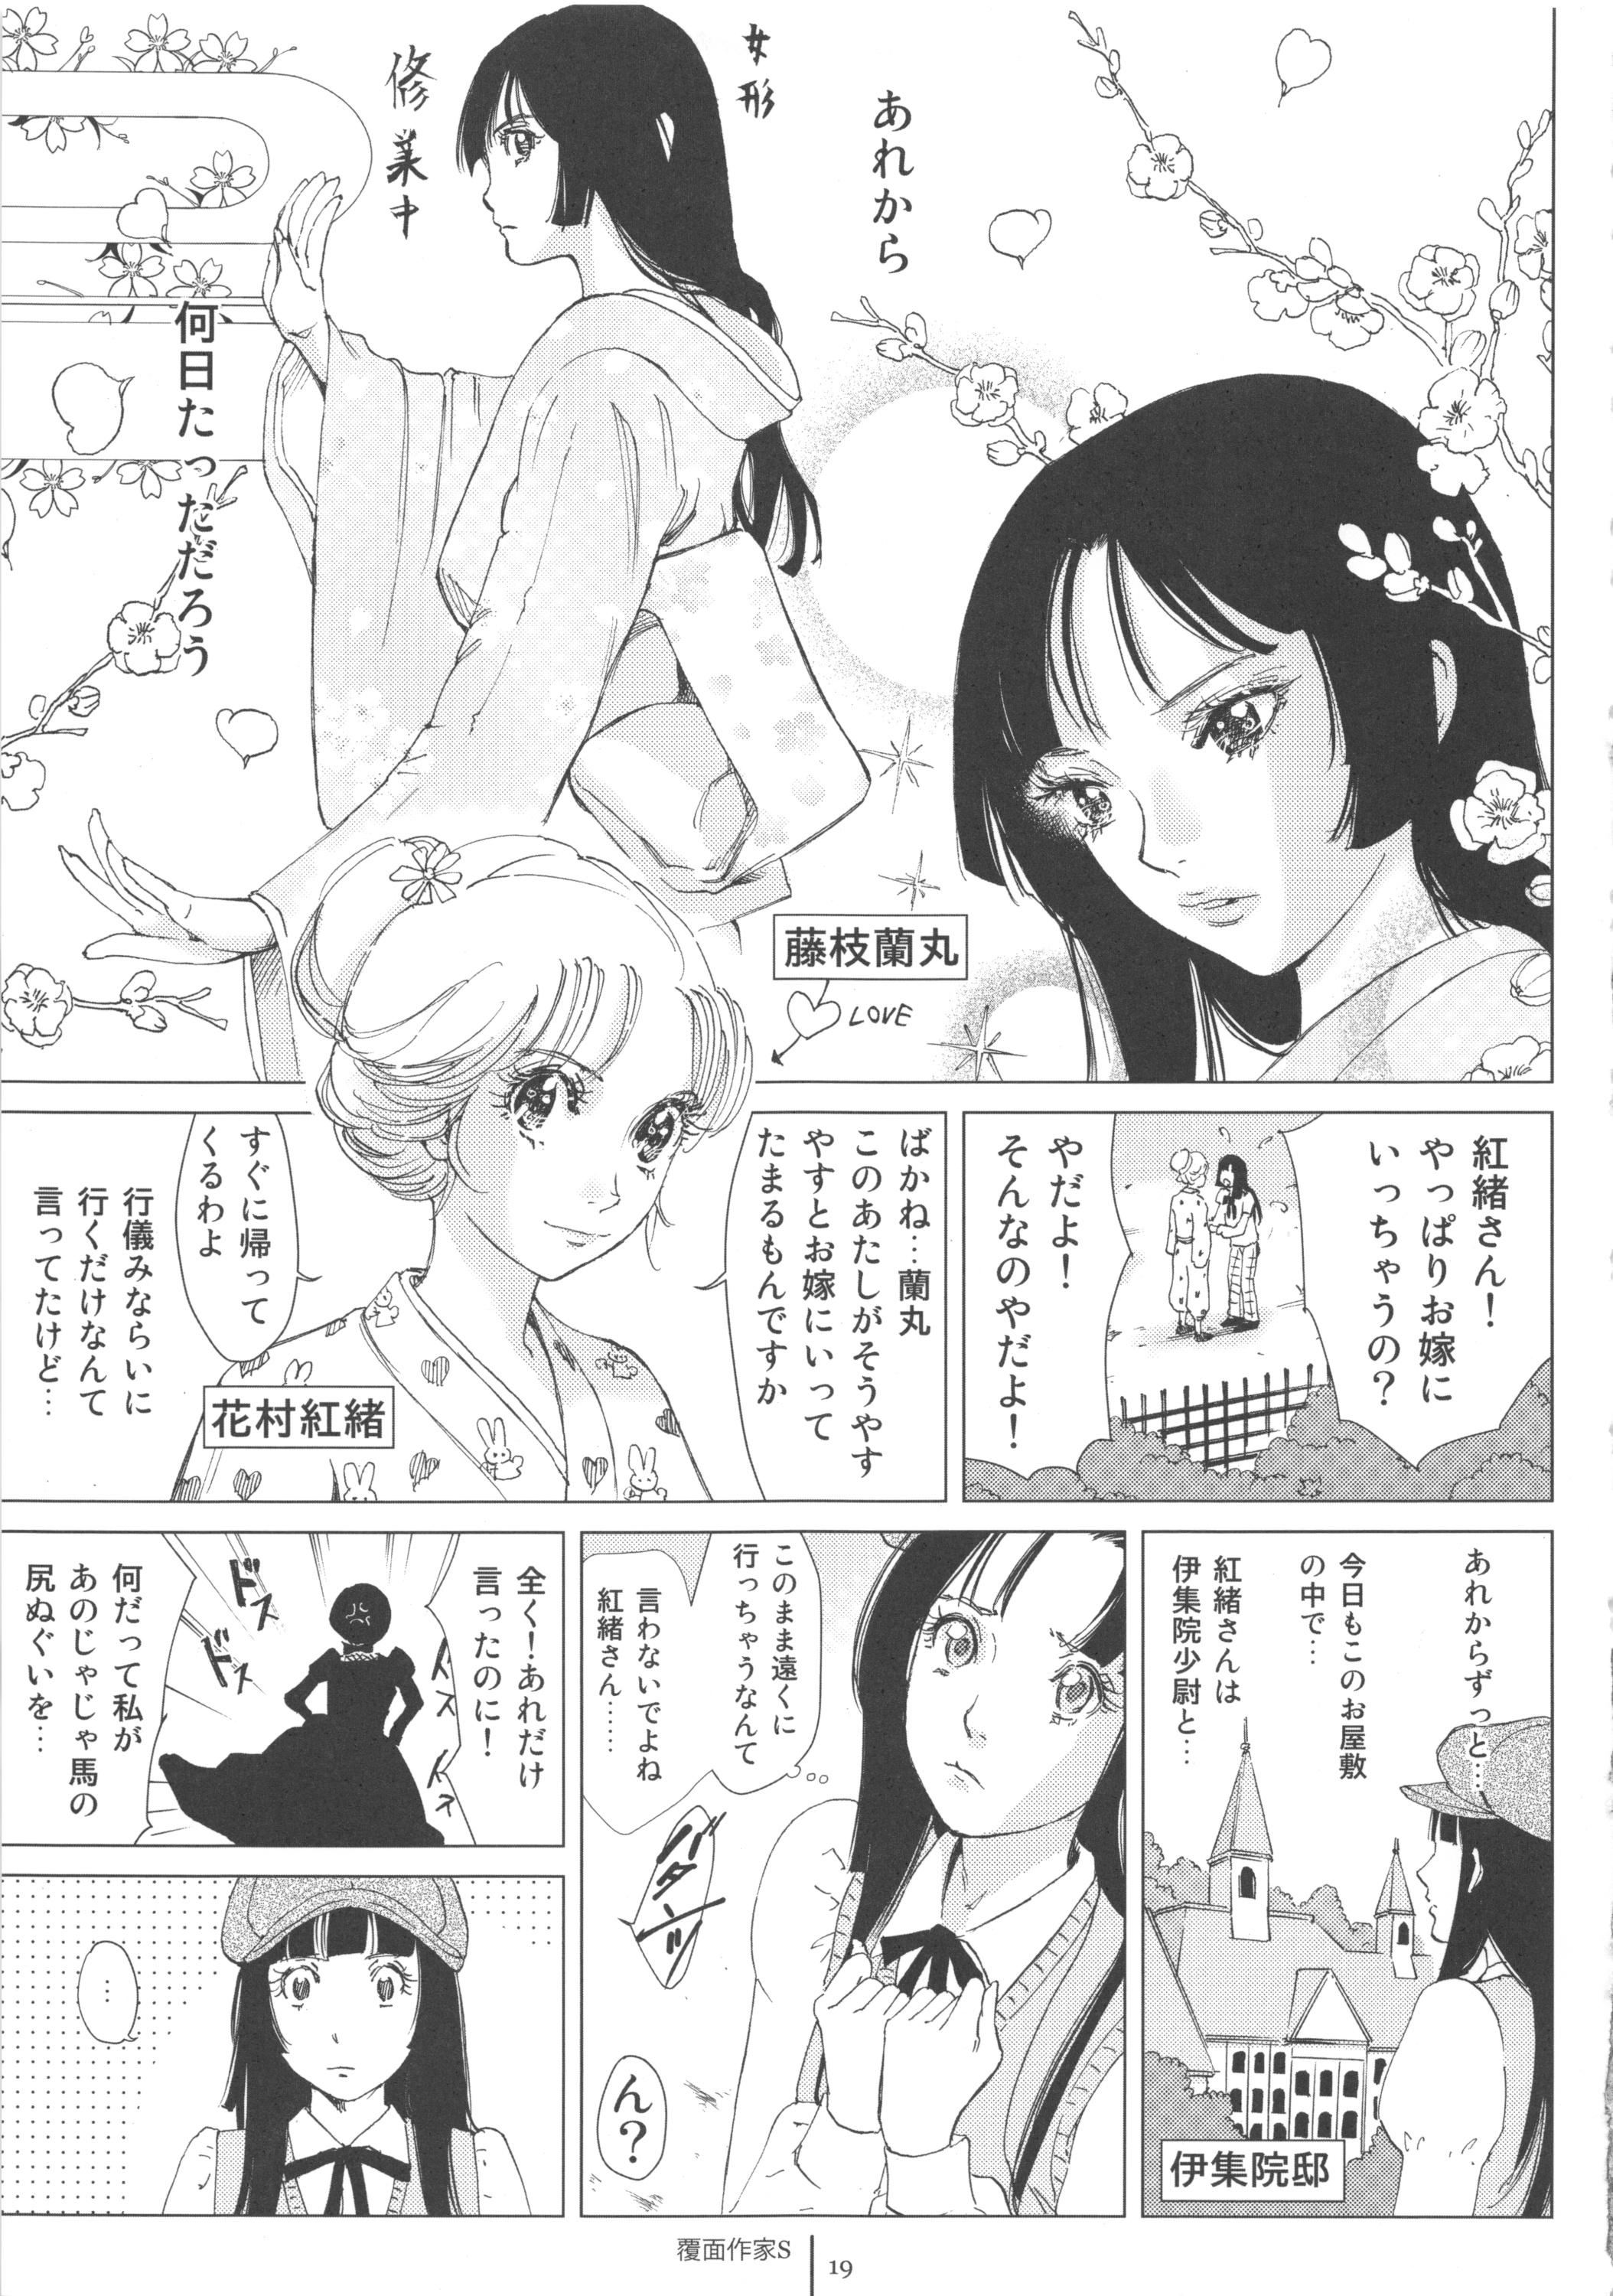 FLOUR Shoujo Manga Graffiti 18